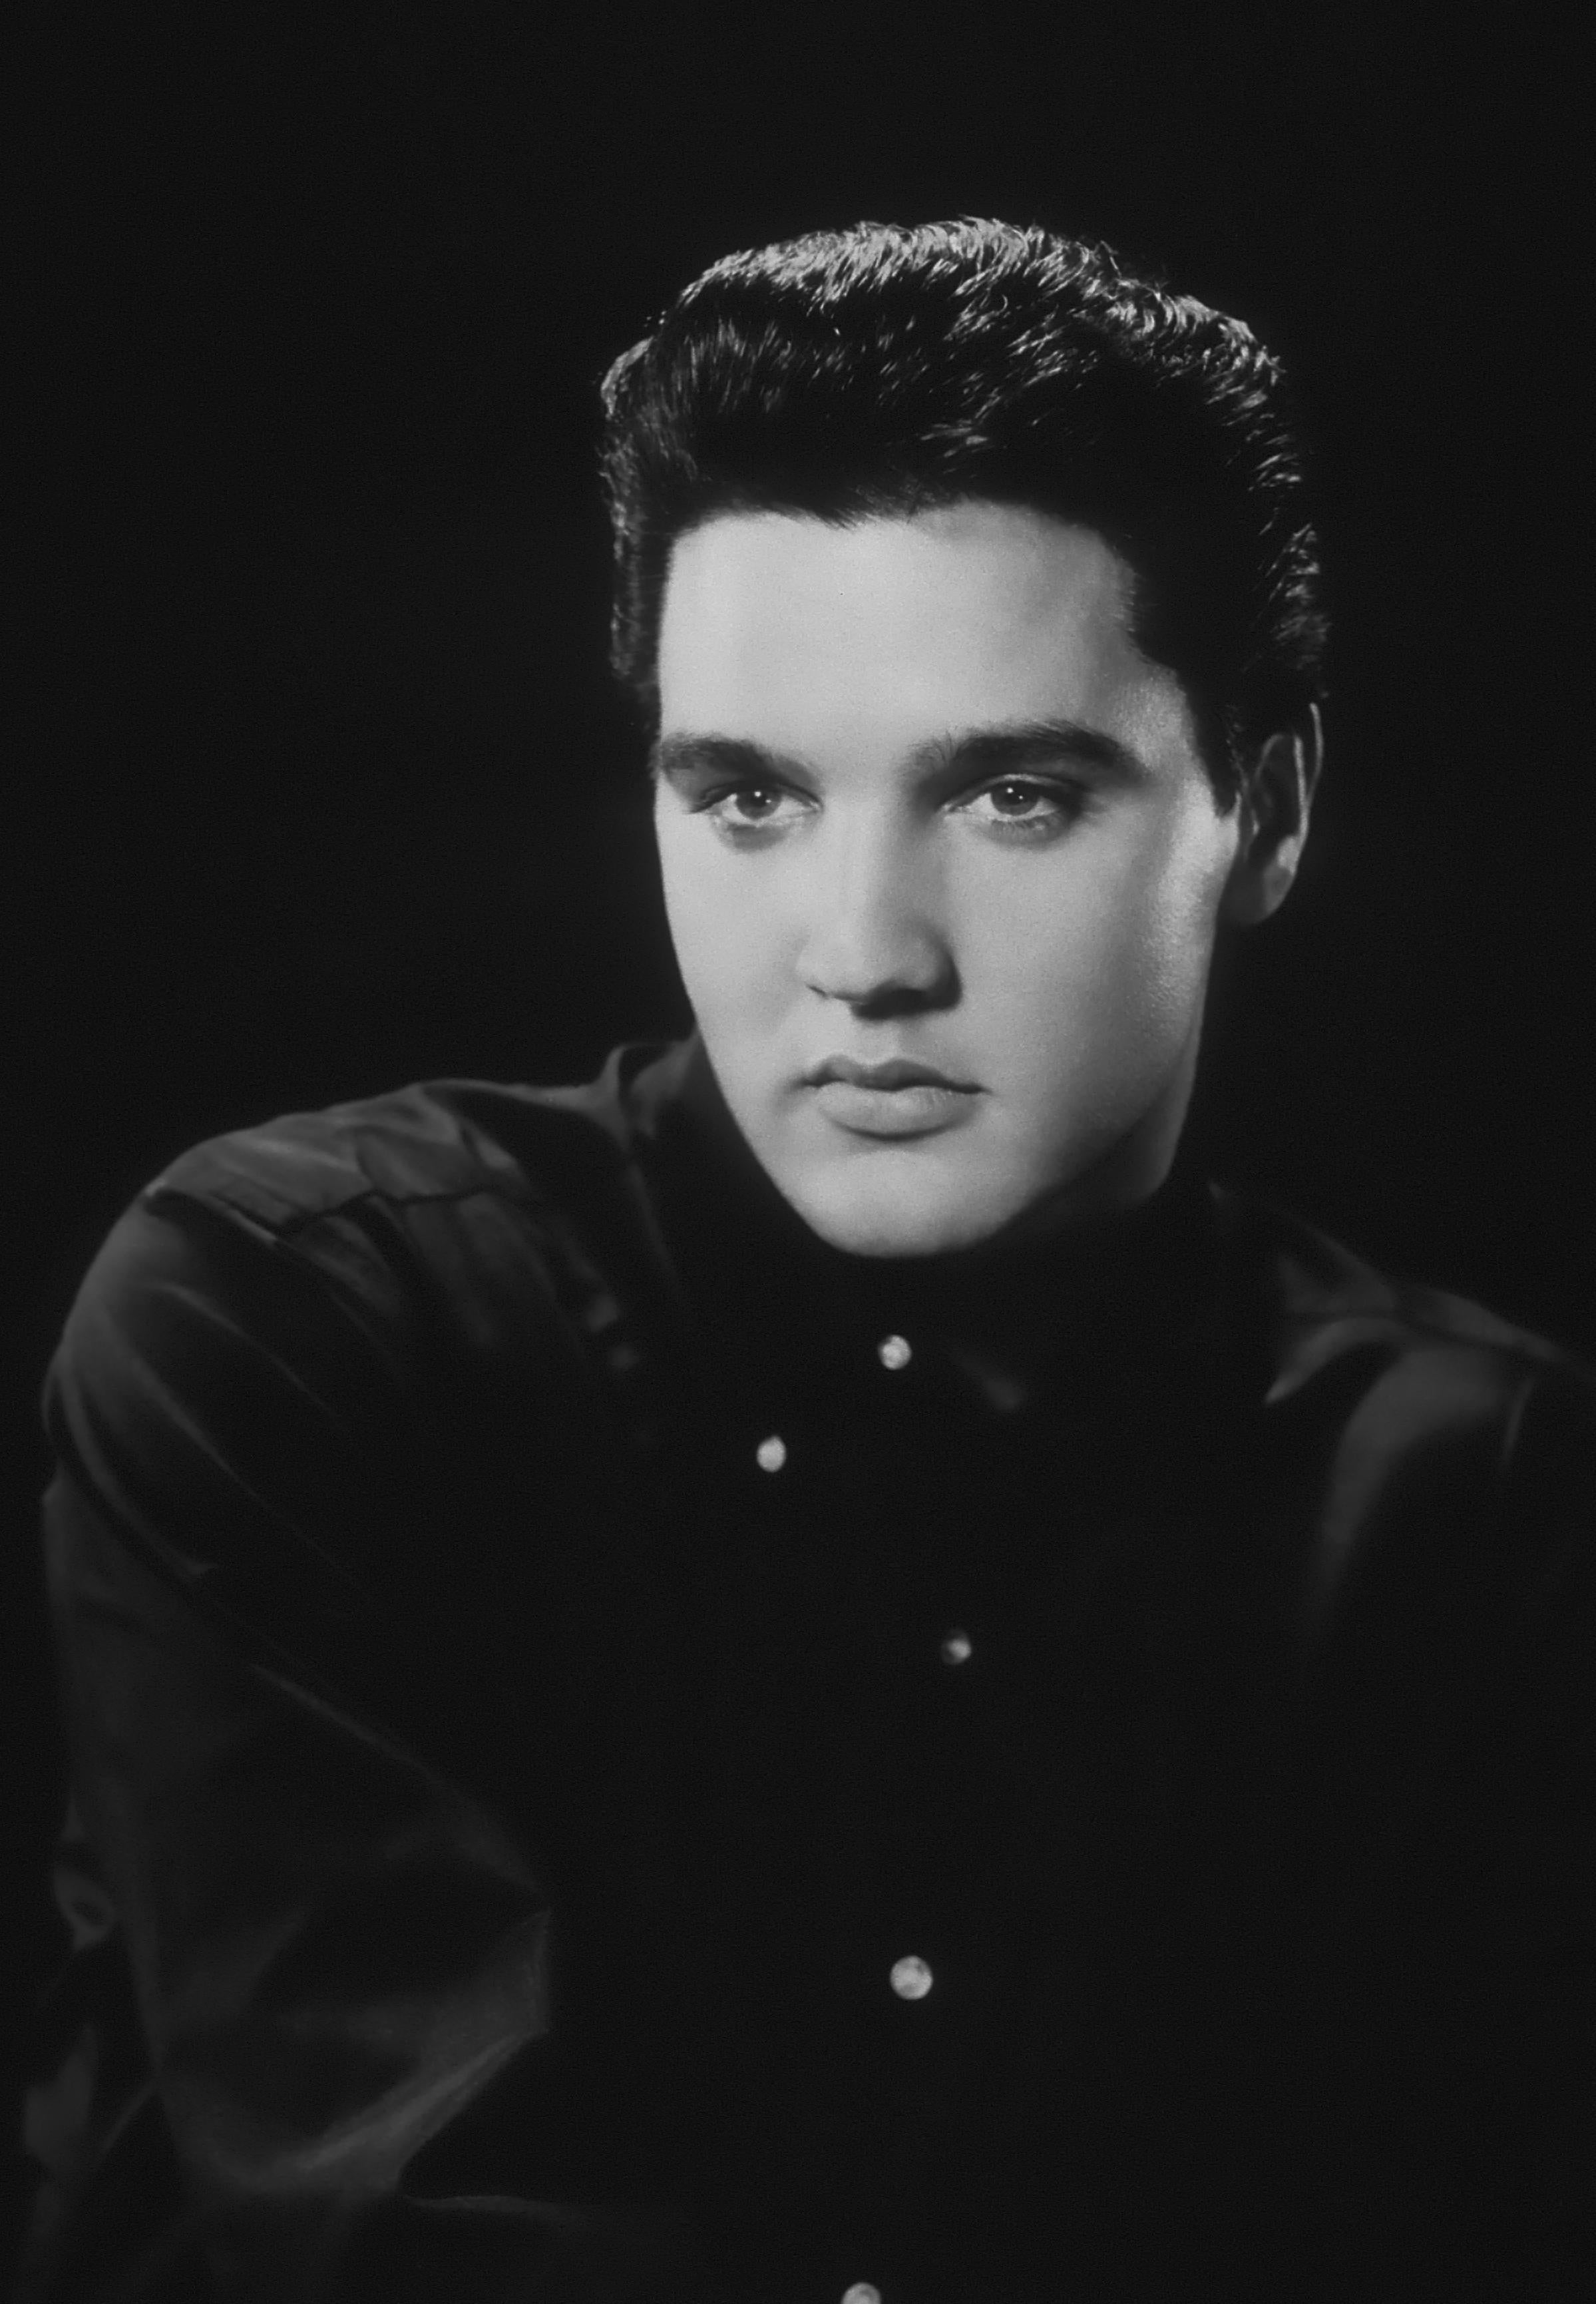 Unknown Portrait Photograph - Elvis Presley: Handsome Star in the Studio II Globe Photos Fine Art Print